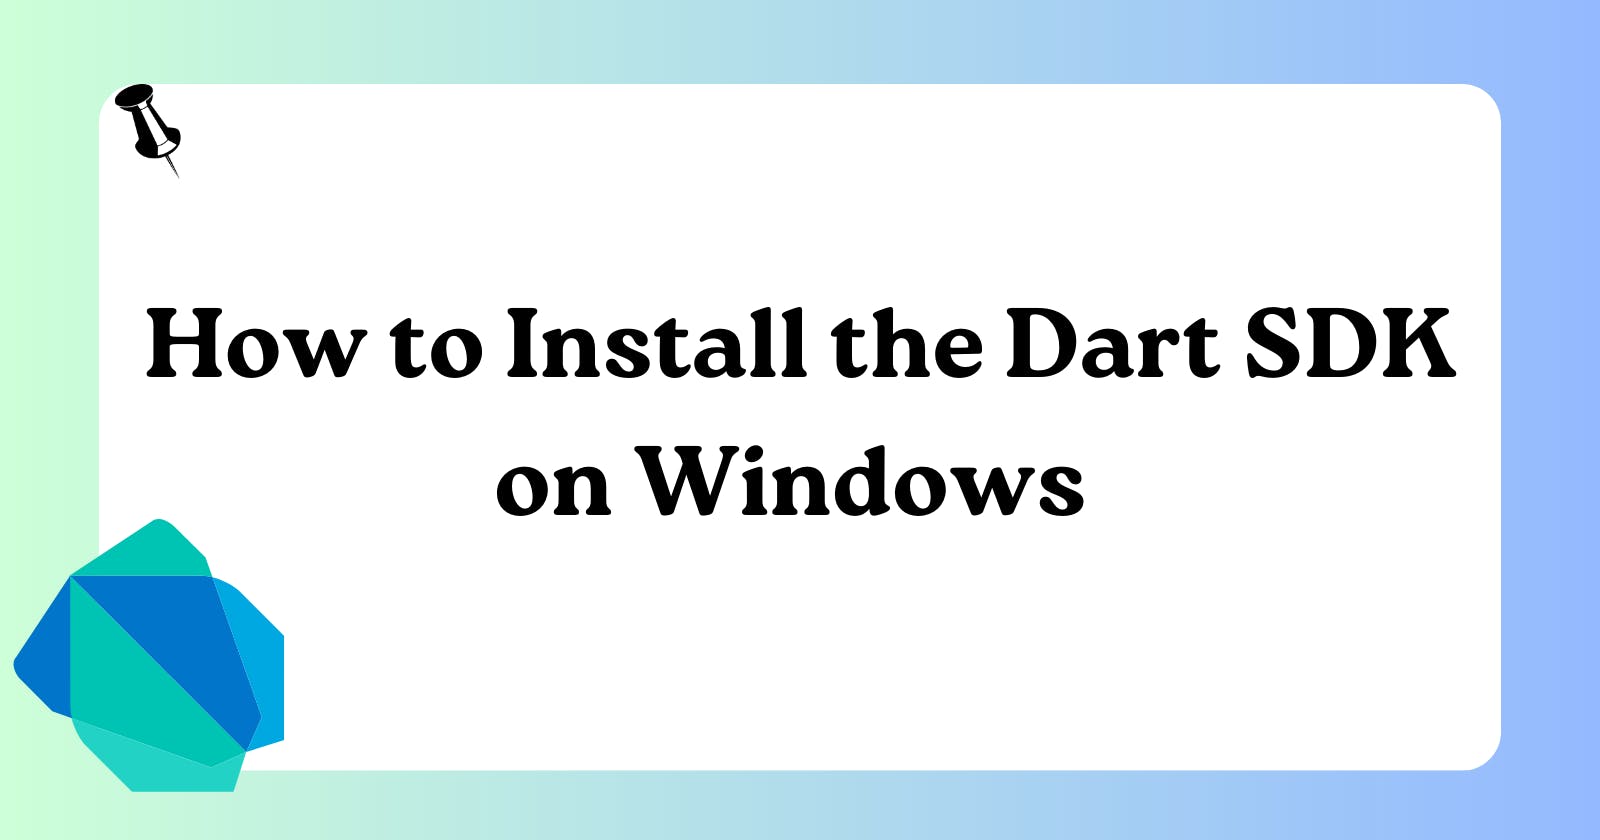 How to install the Dart SDK on Windows